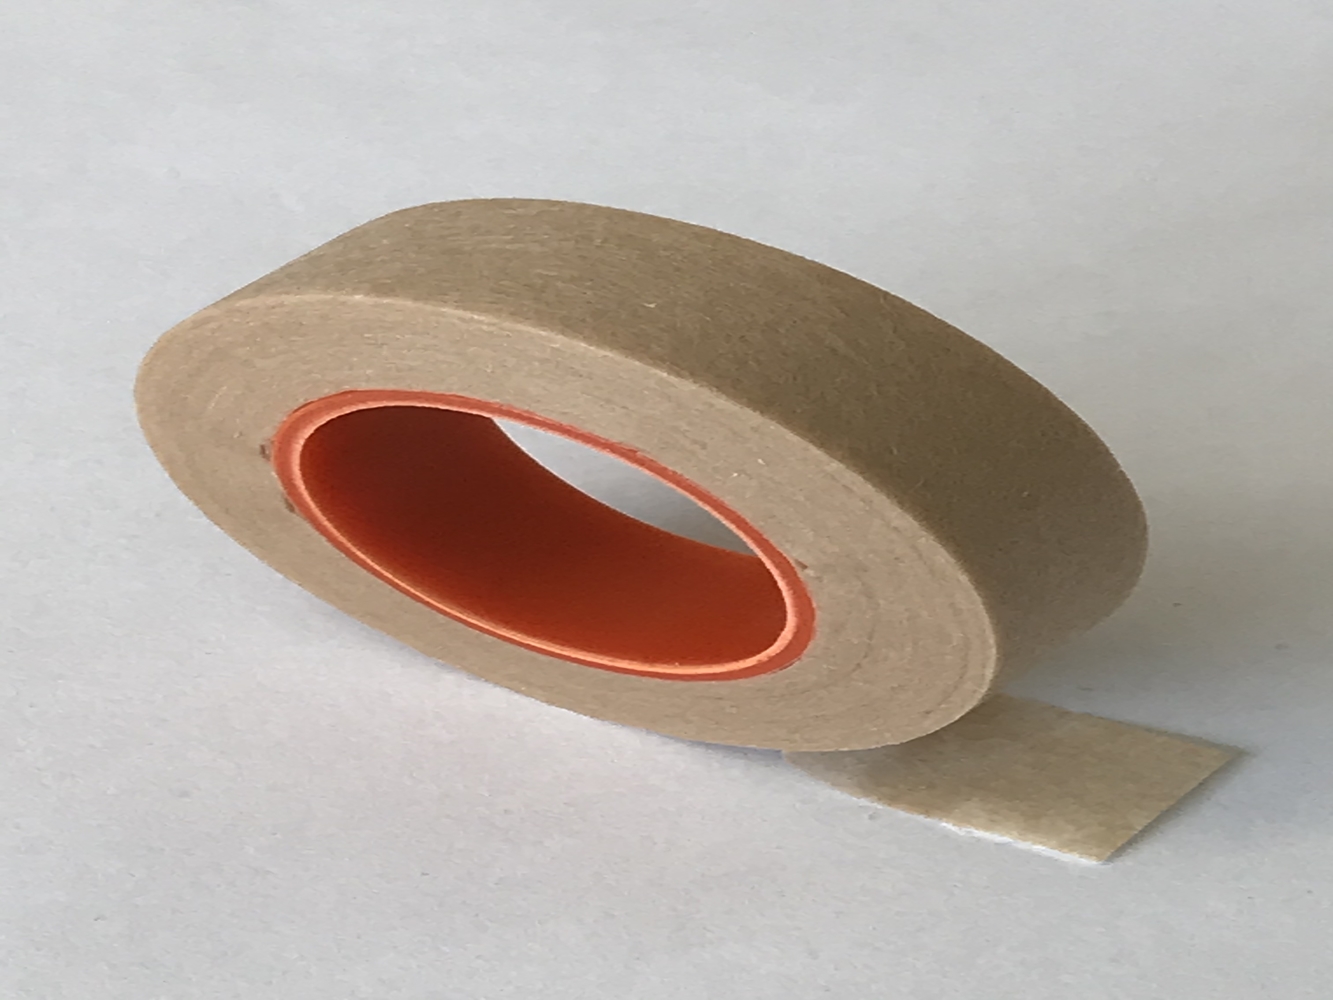 Häfta papper Scanpor beige - 1,25cmx10m - 24 st/förp.